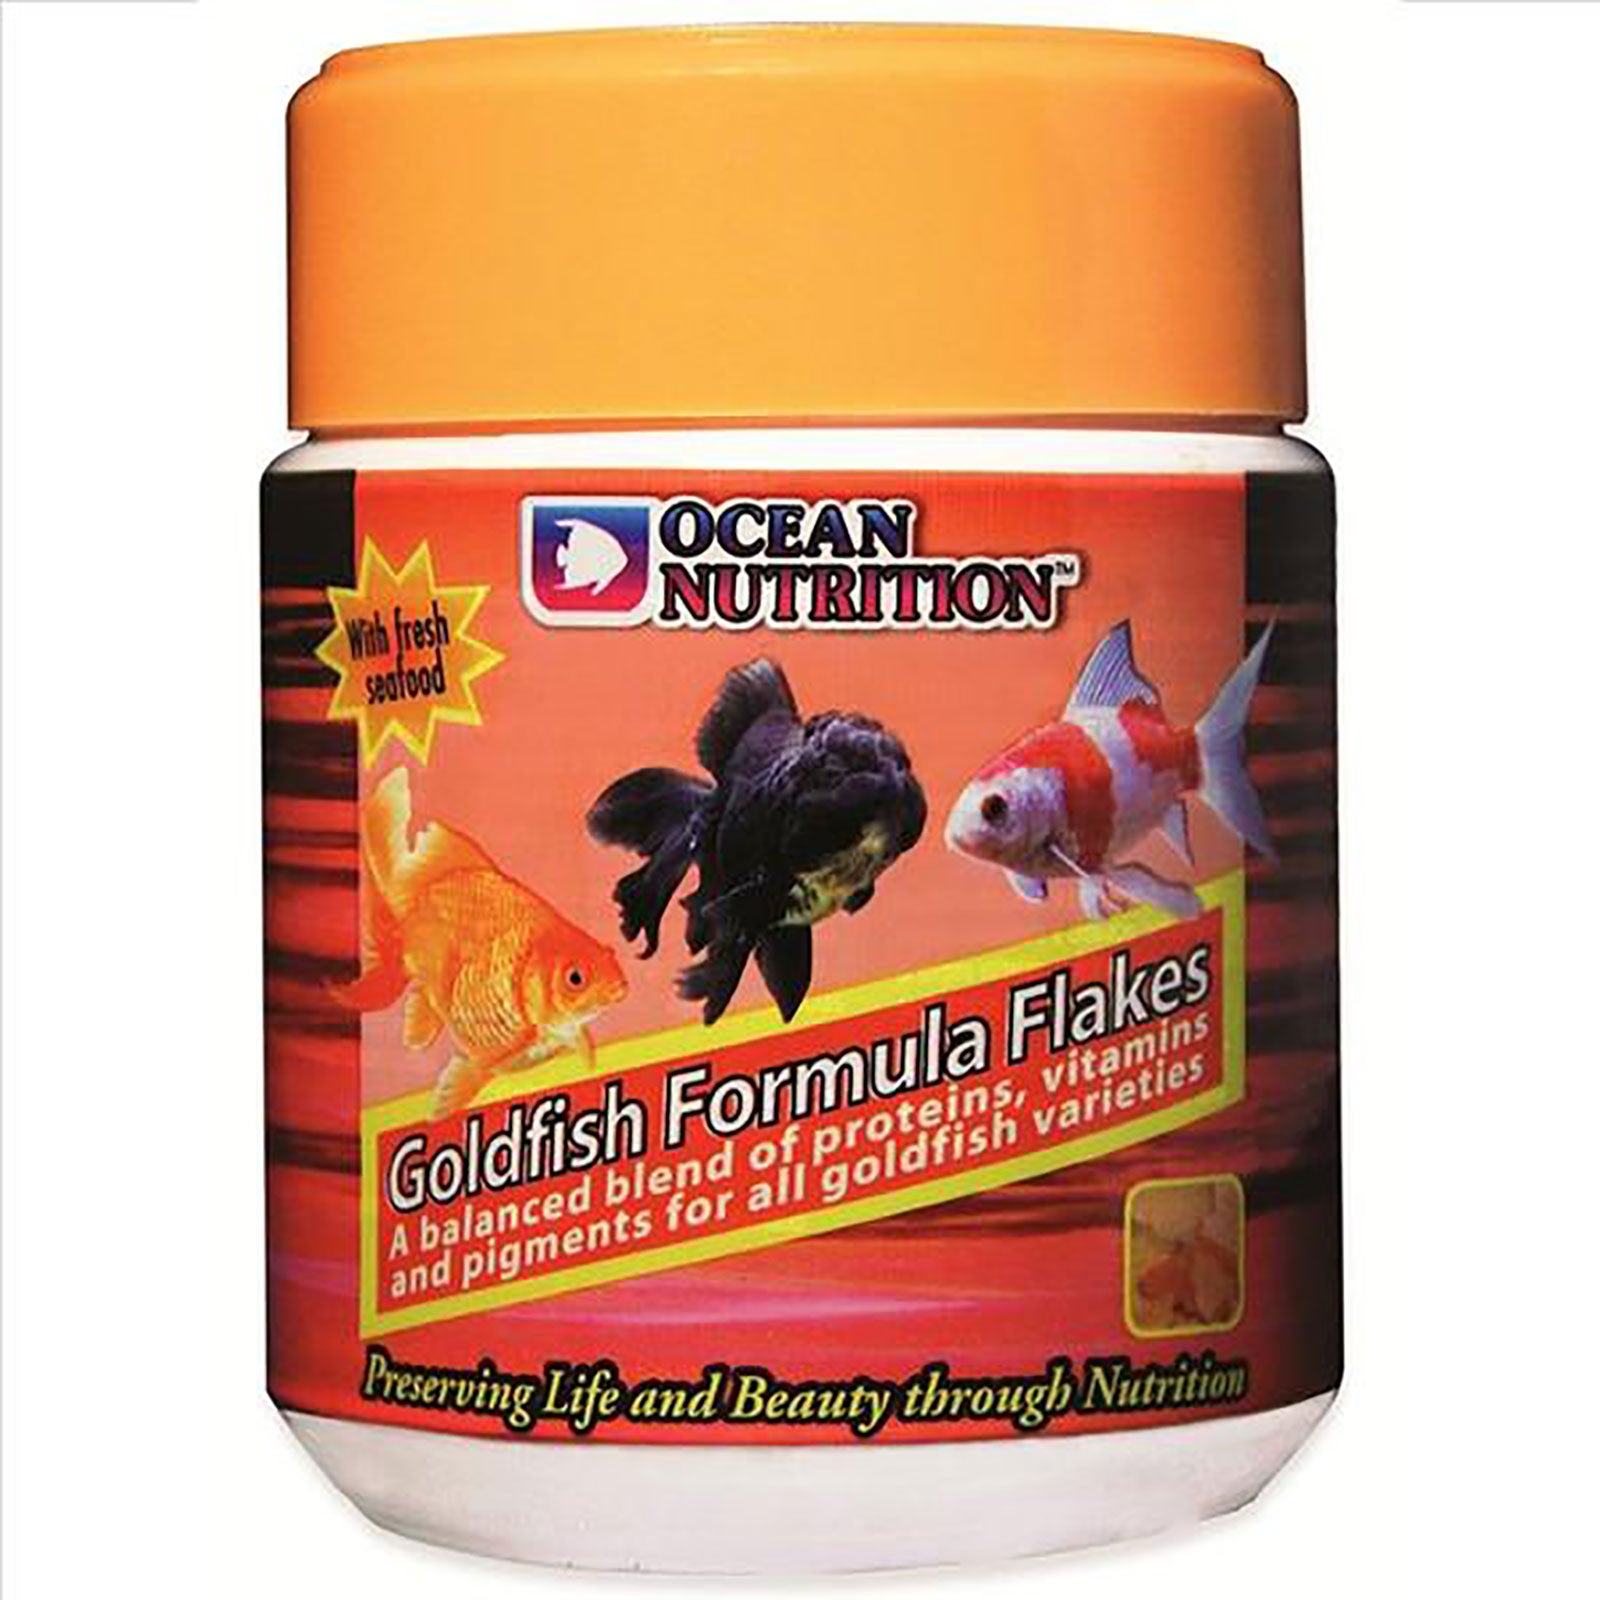 Ocean Nutrition Goldfish Formula Flakes